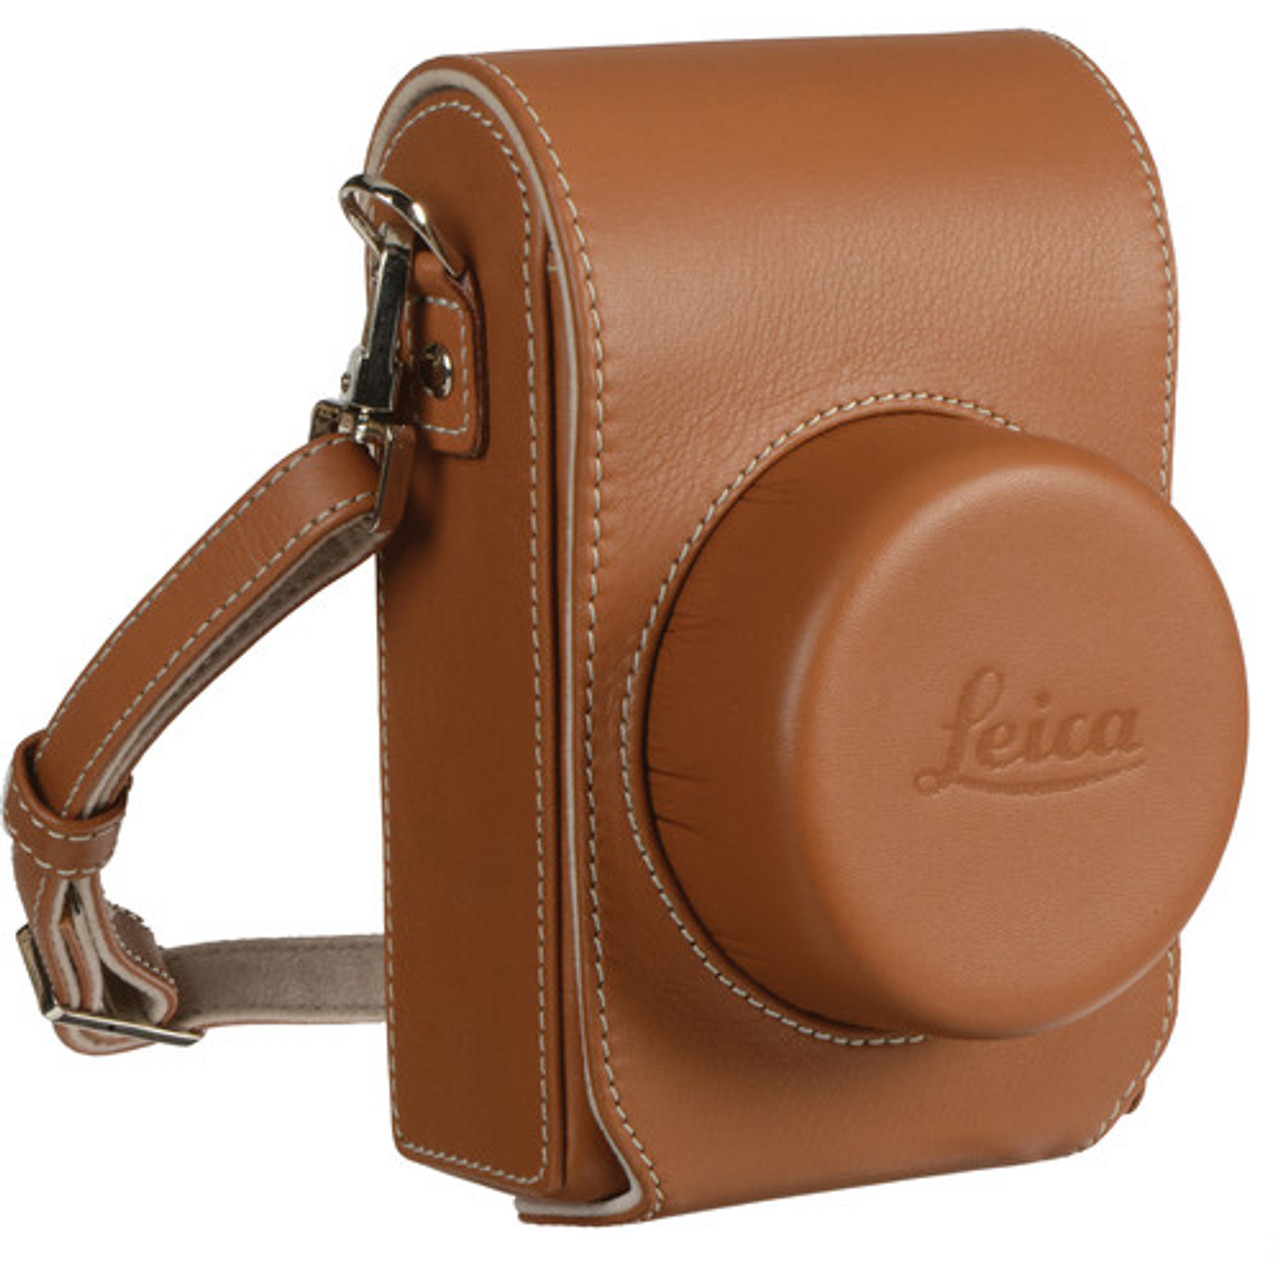 Leica D-LUX (Typ 109) Digital Camera Explorer Kit at